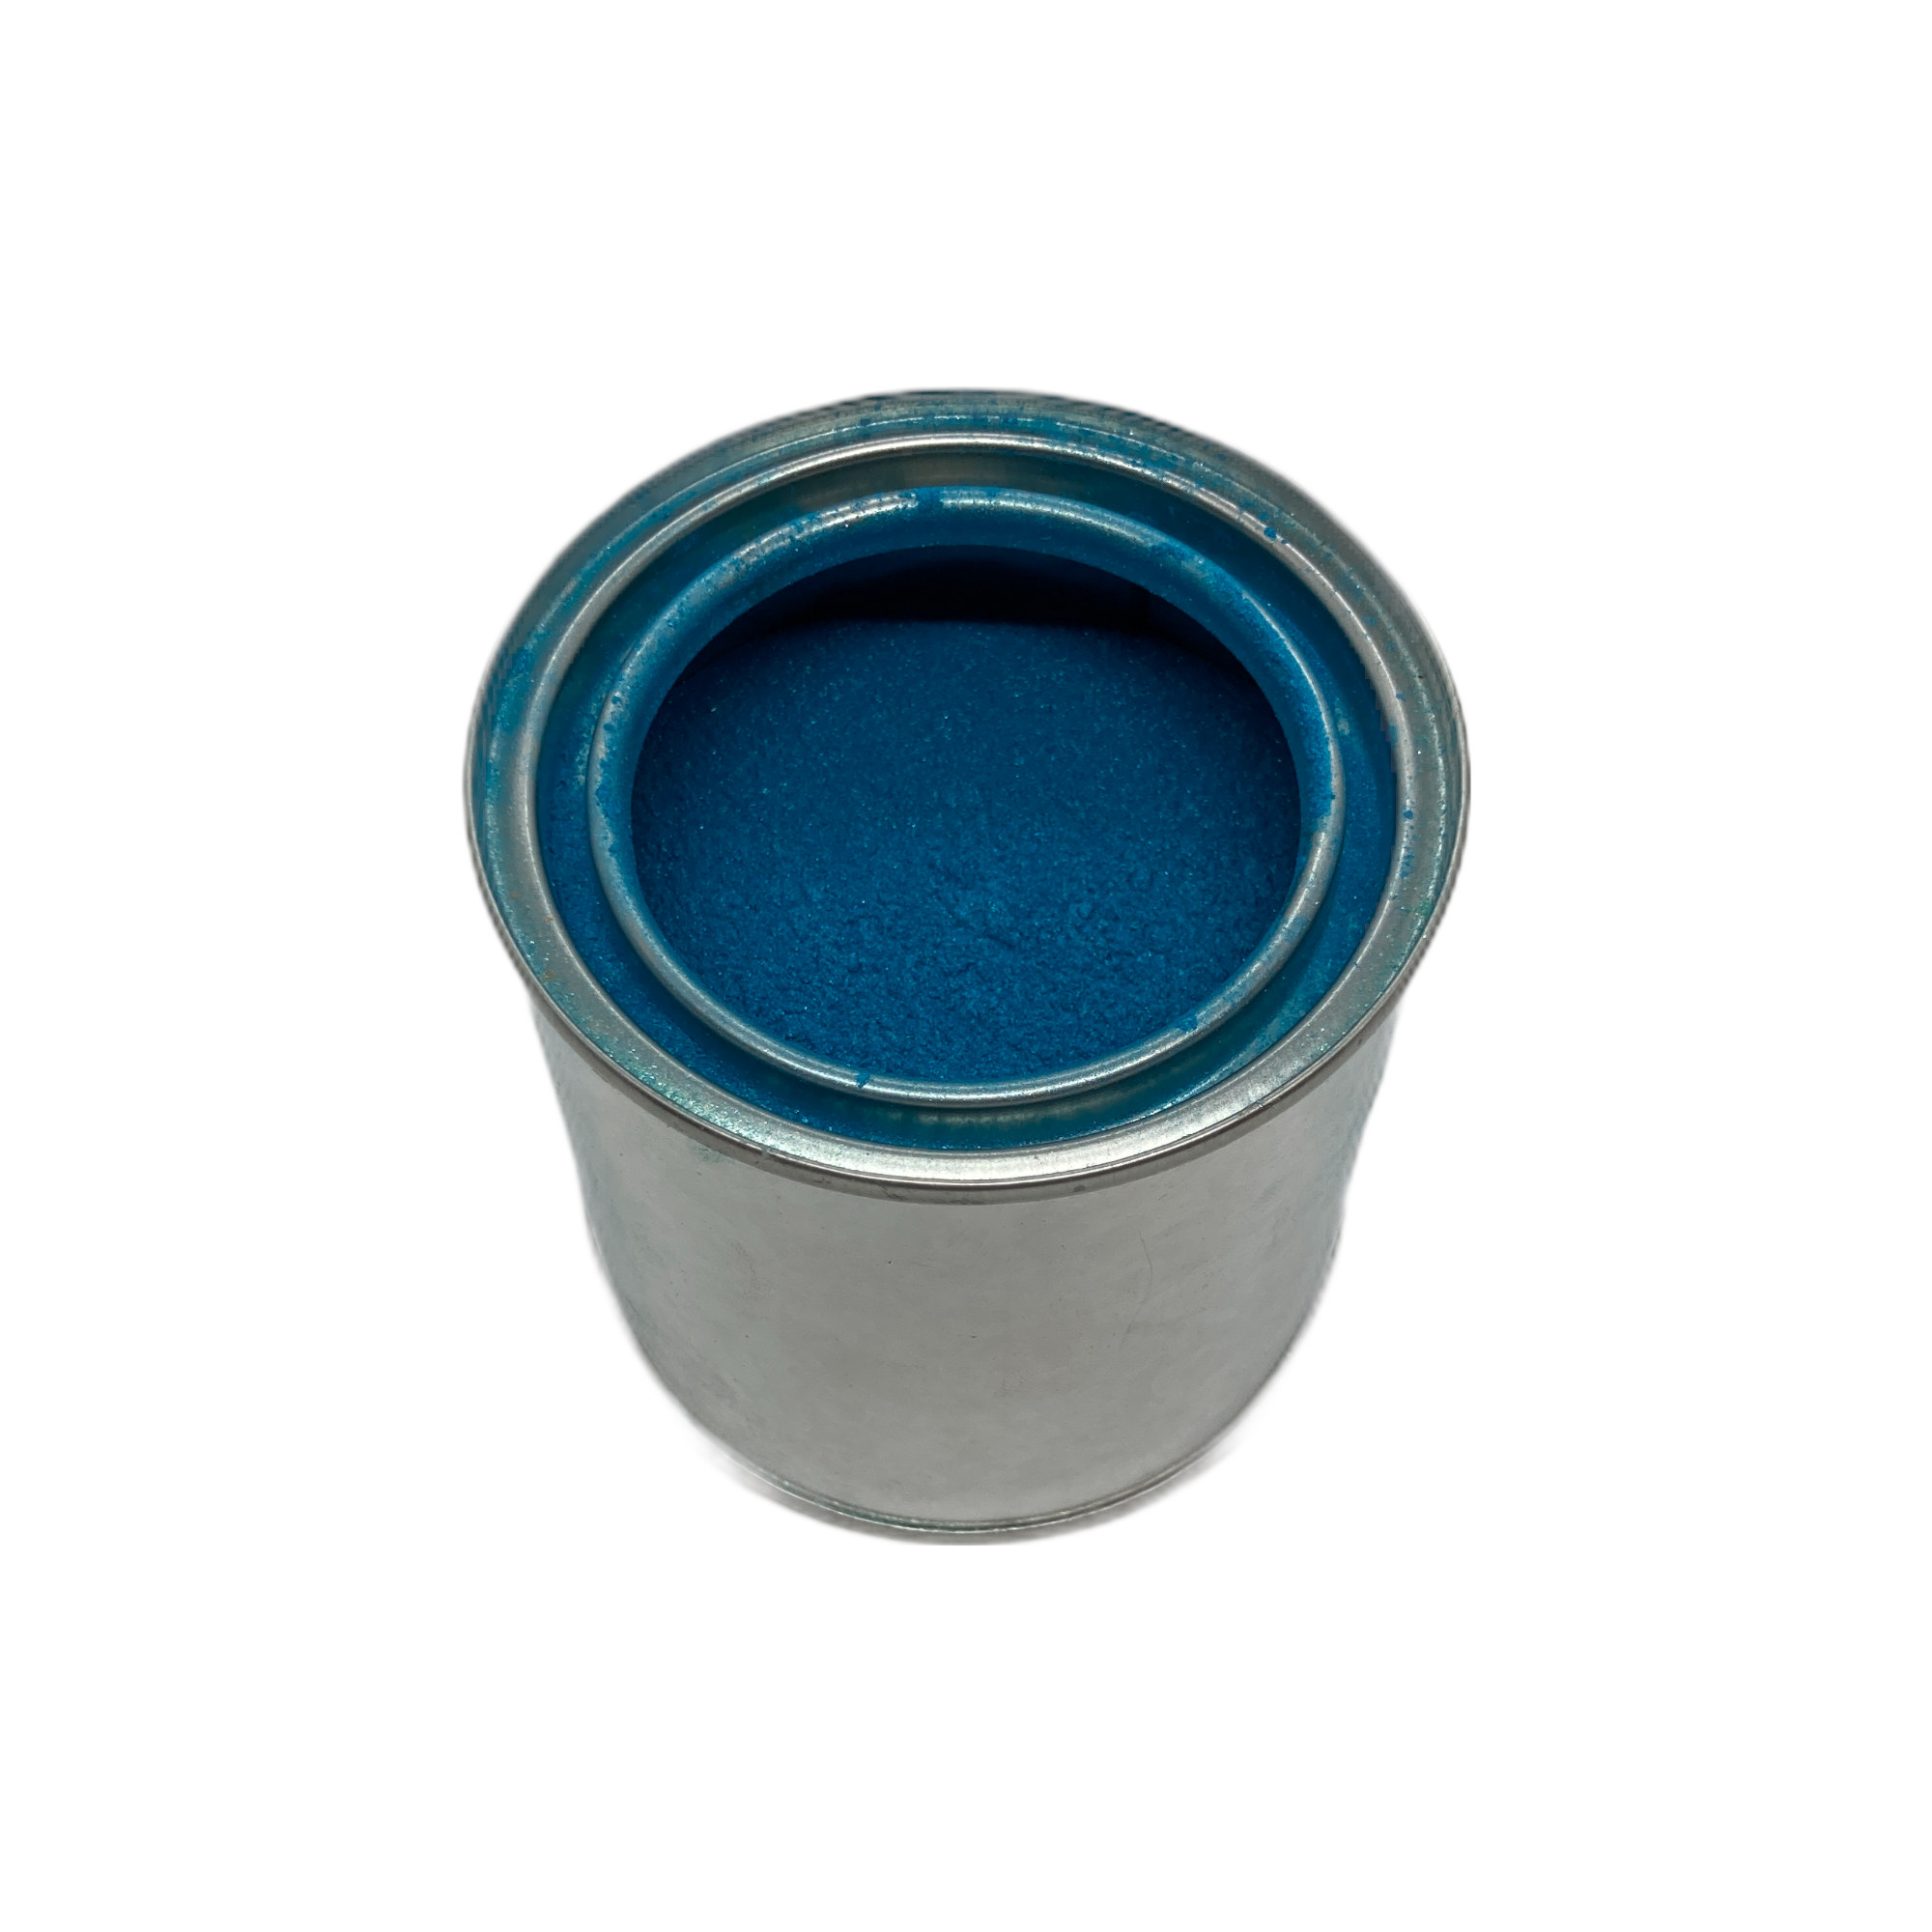 Mica Metallic Powder Pigment - Magic Blue